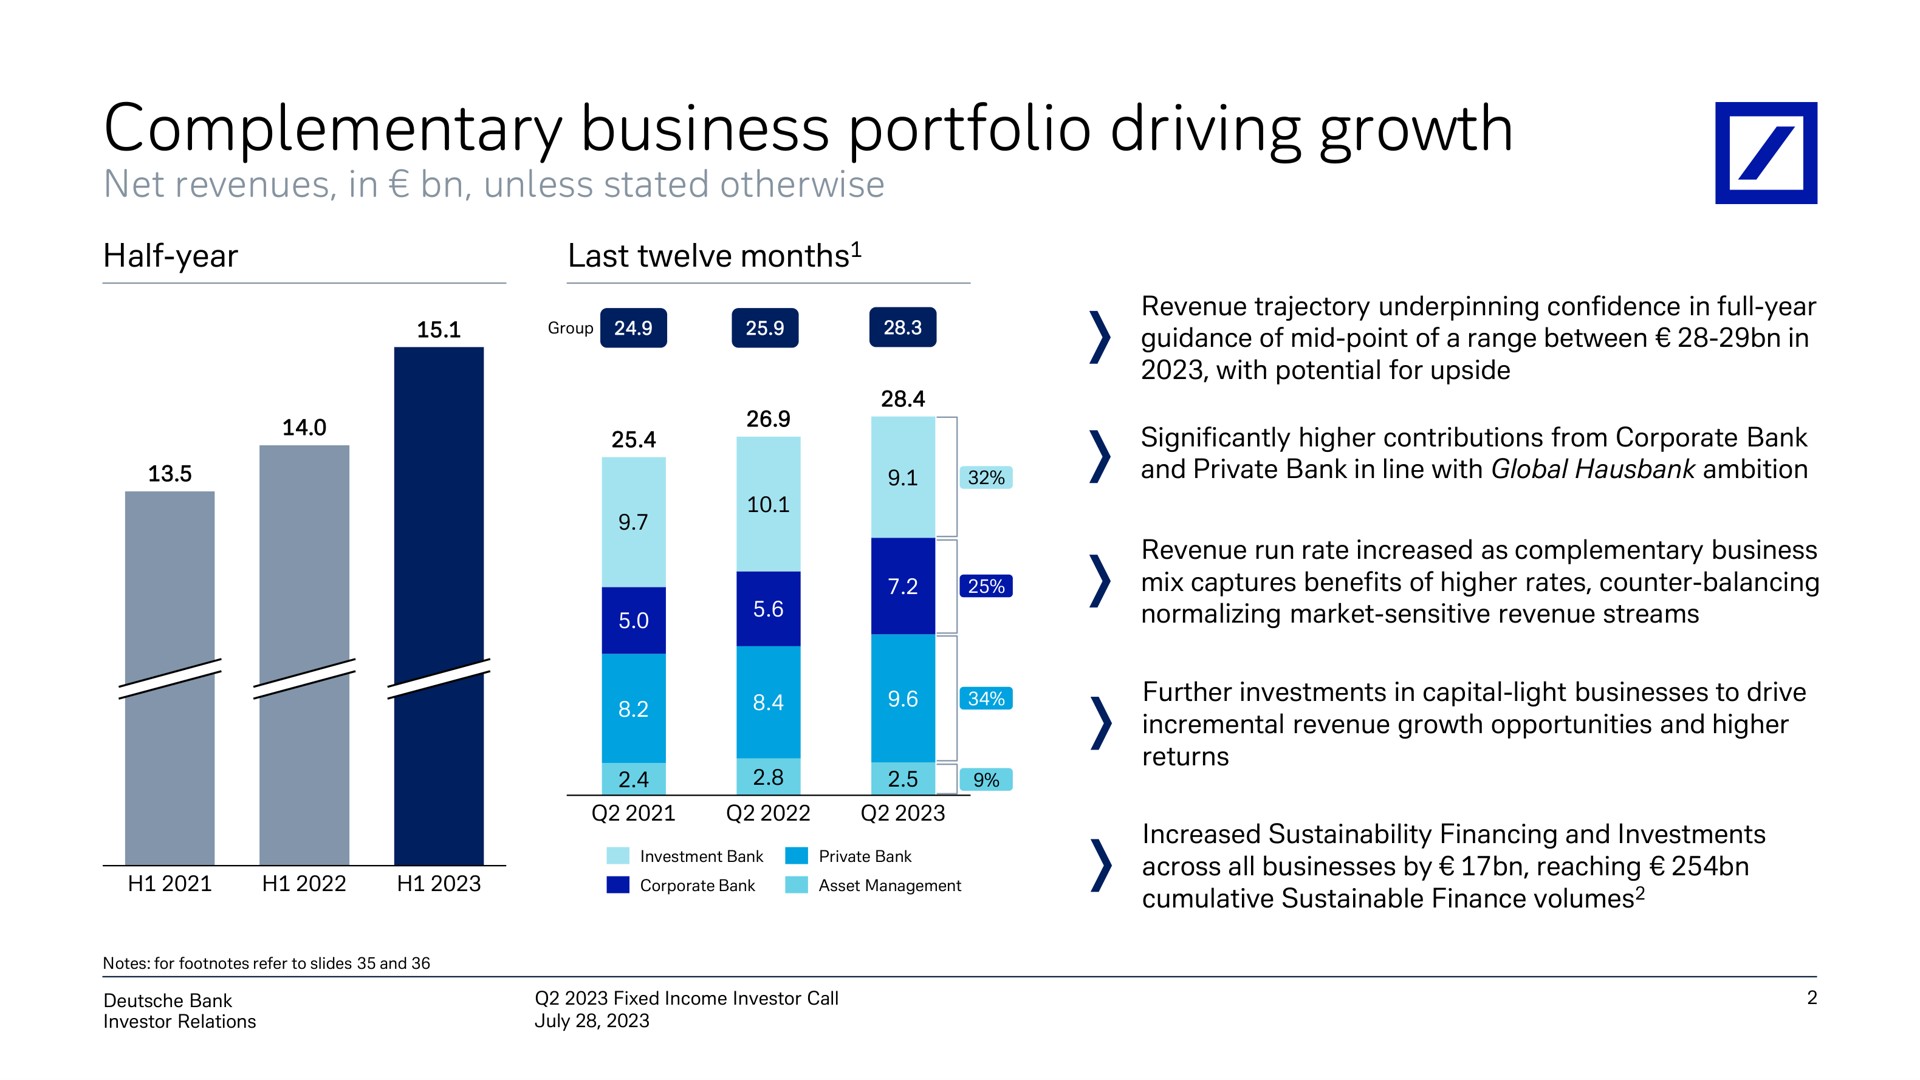 complementary business portfolio driving growth | Deutsche Bank